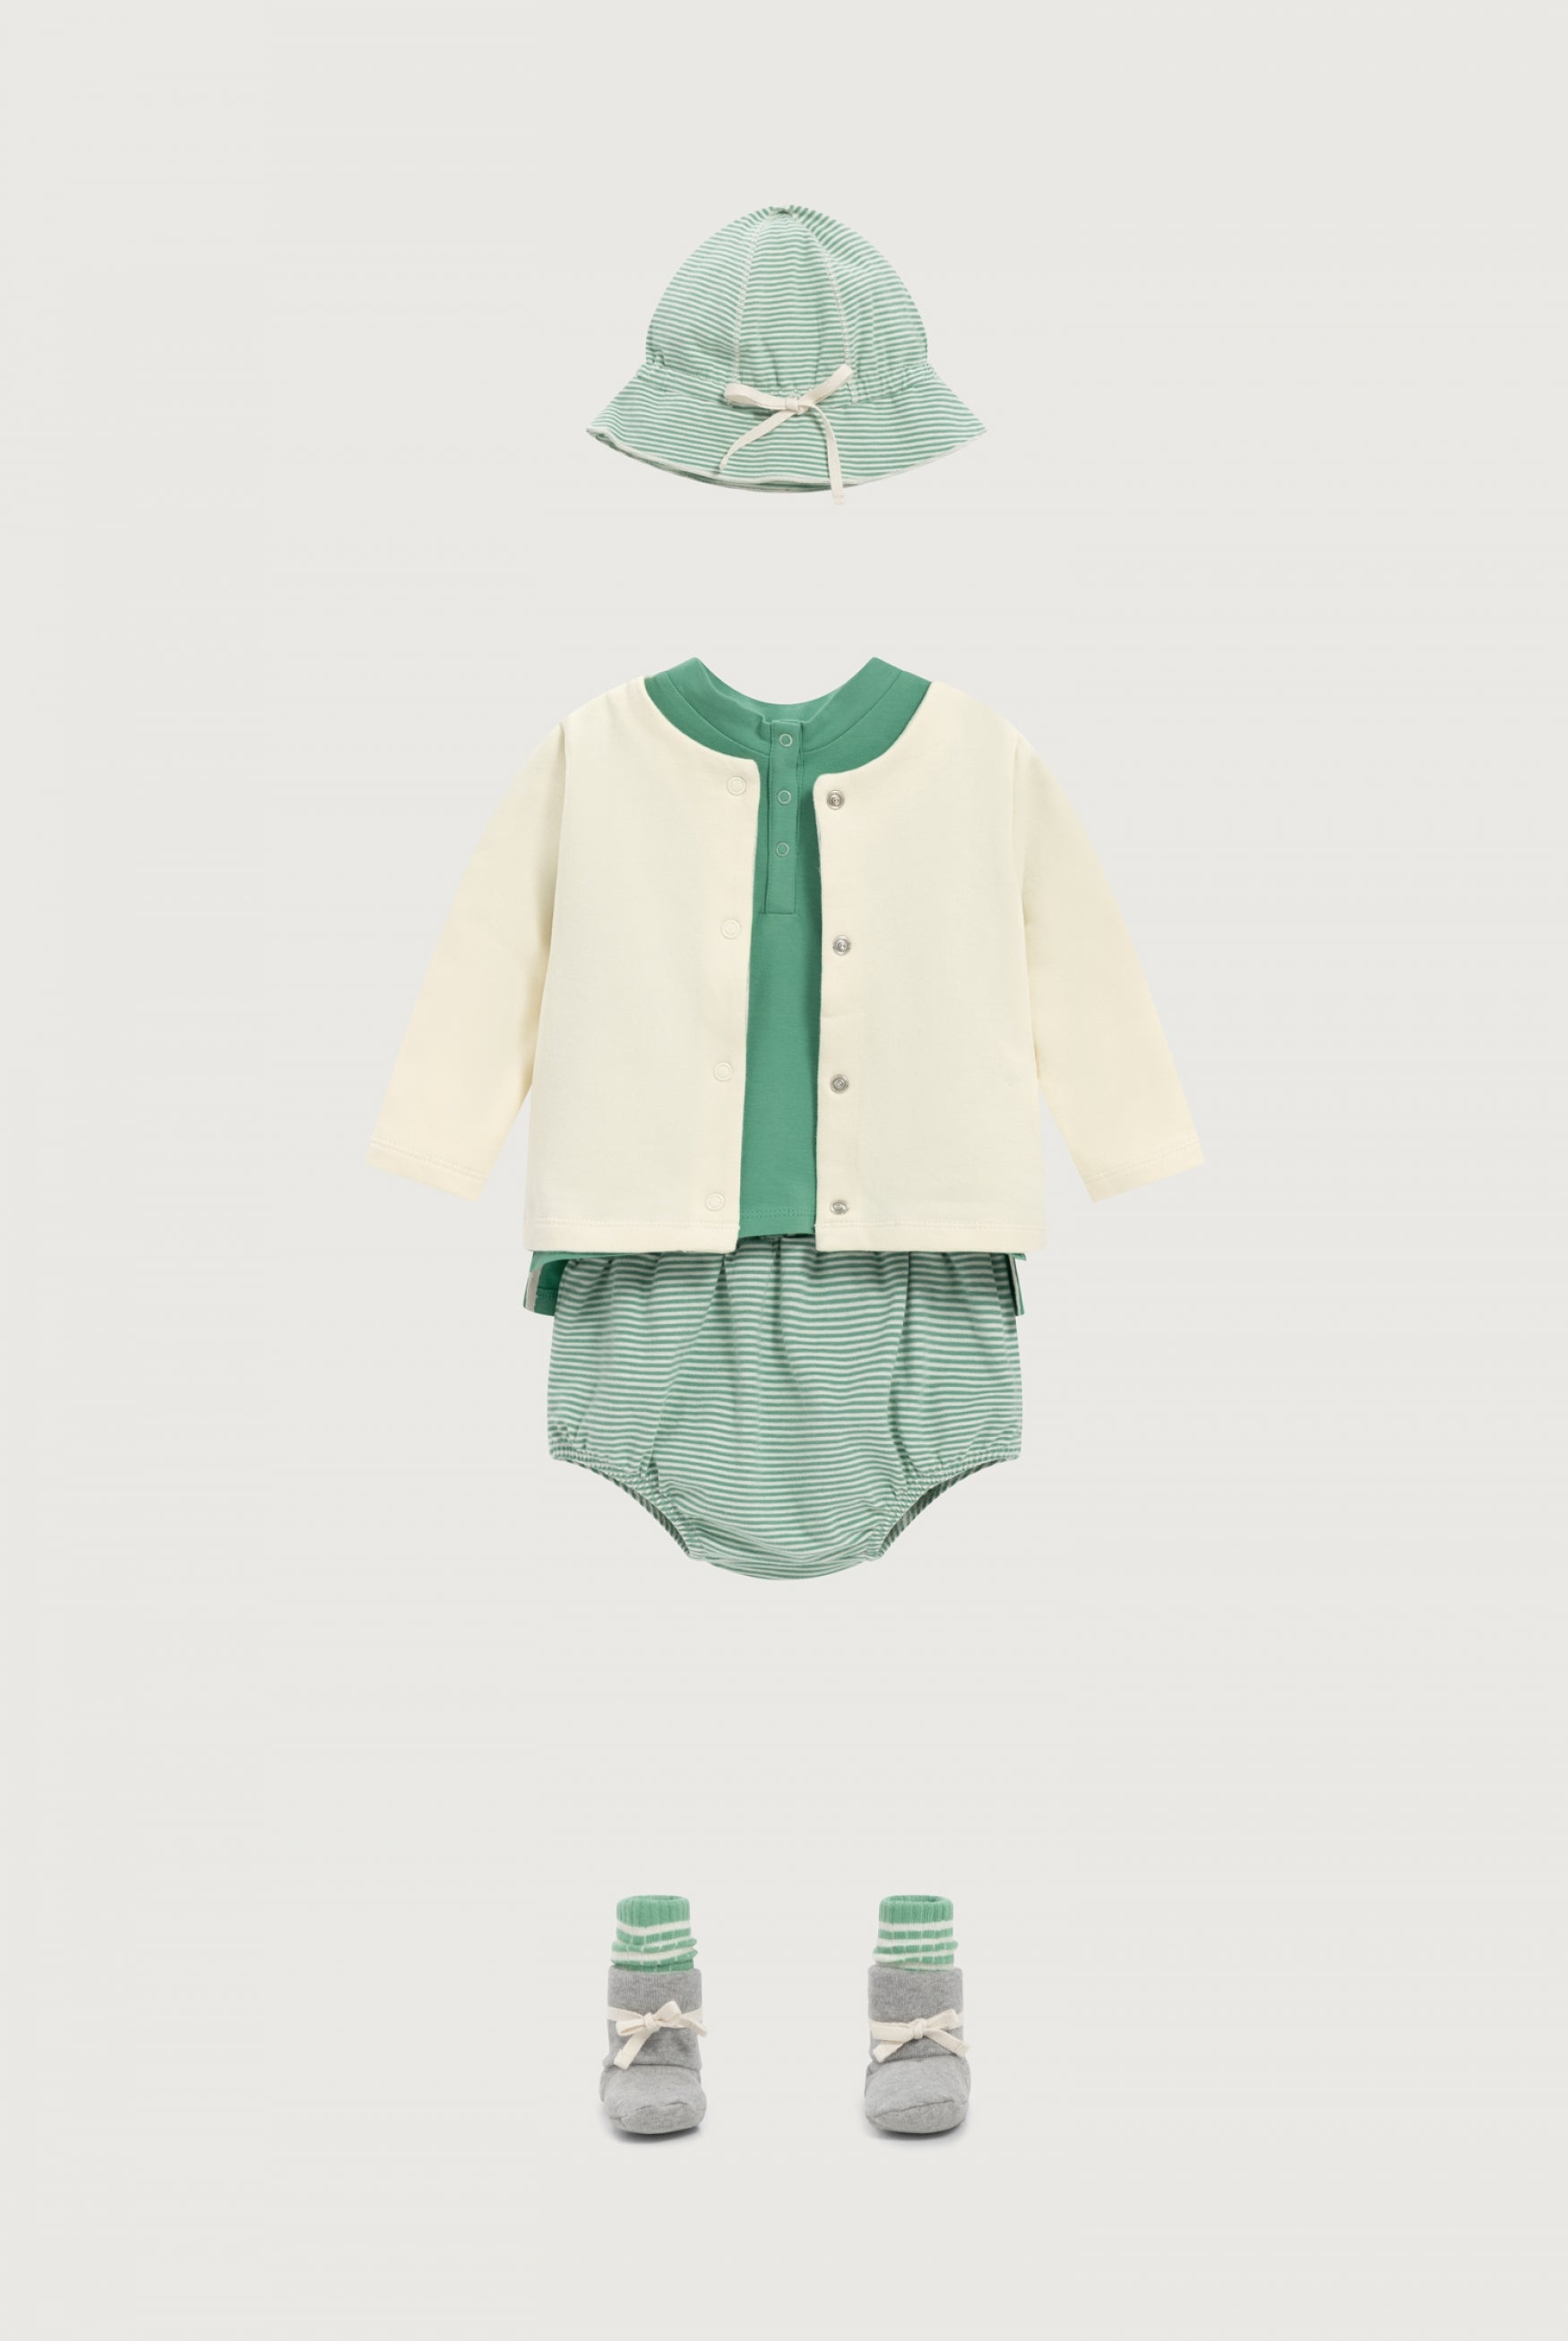 Baby Sun Hat | Bright Green - Cream